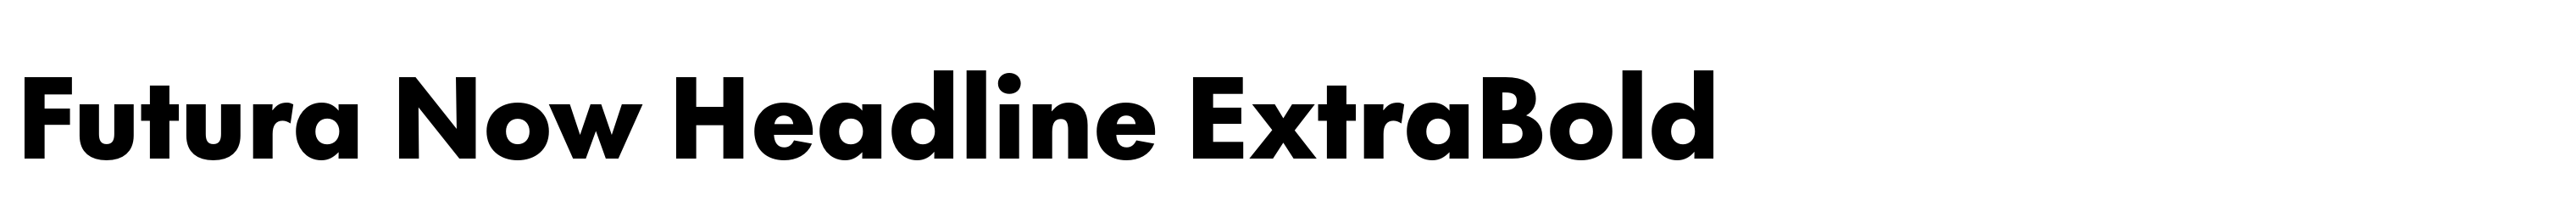 Futura Now Headline ExtraBold